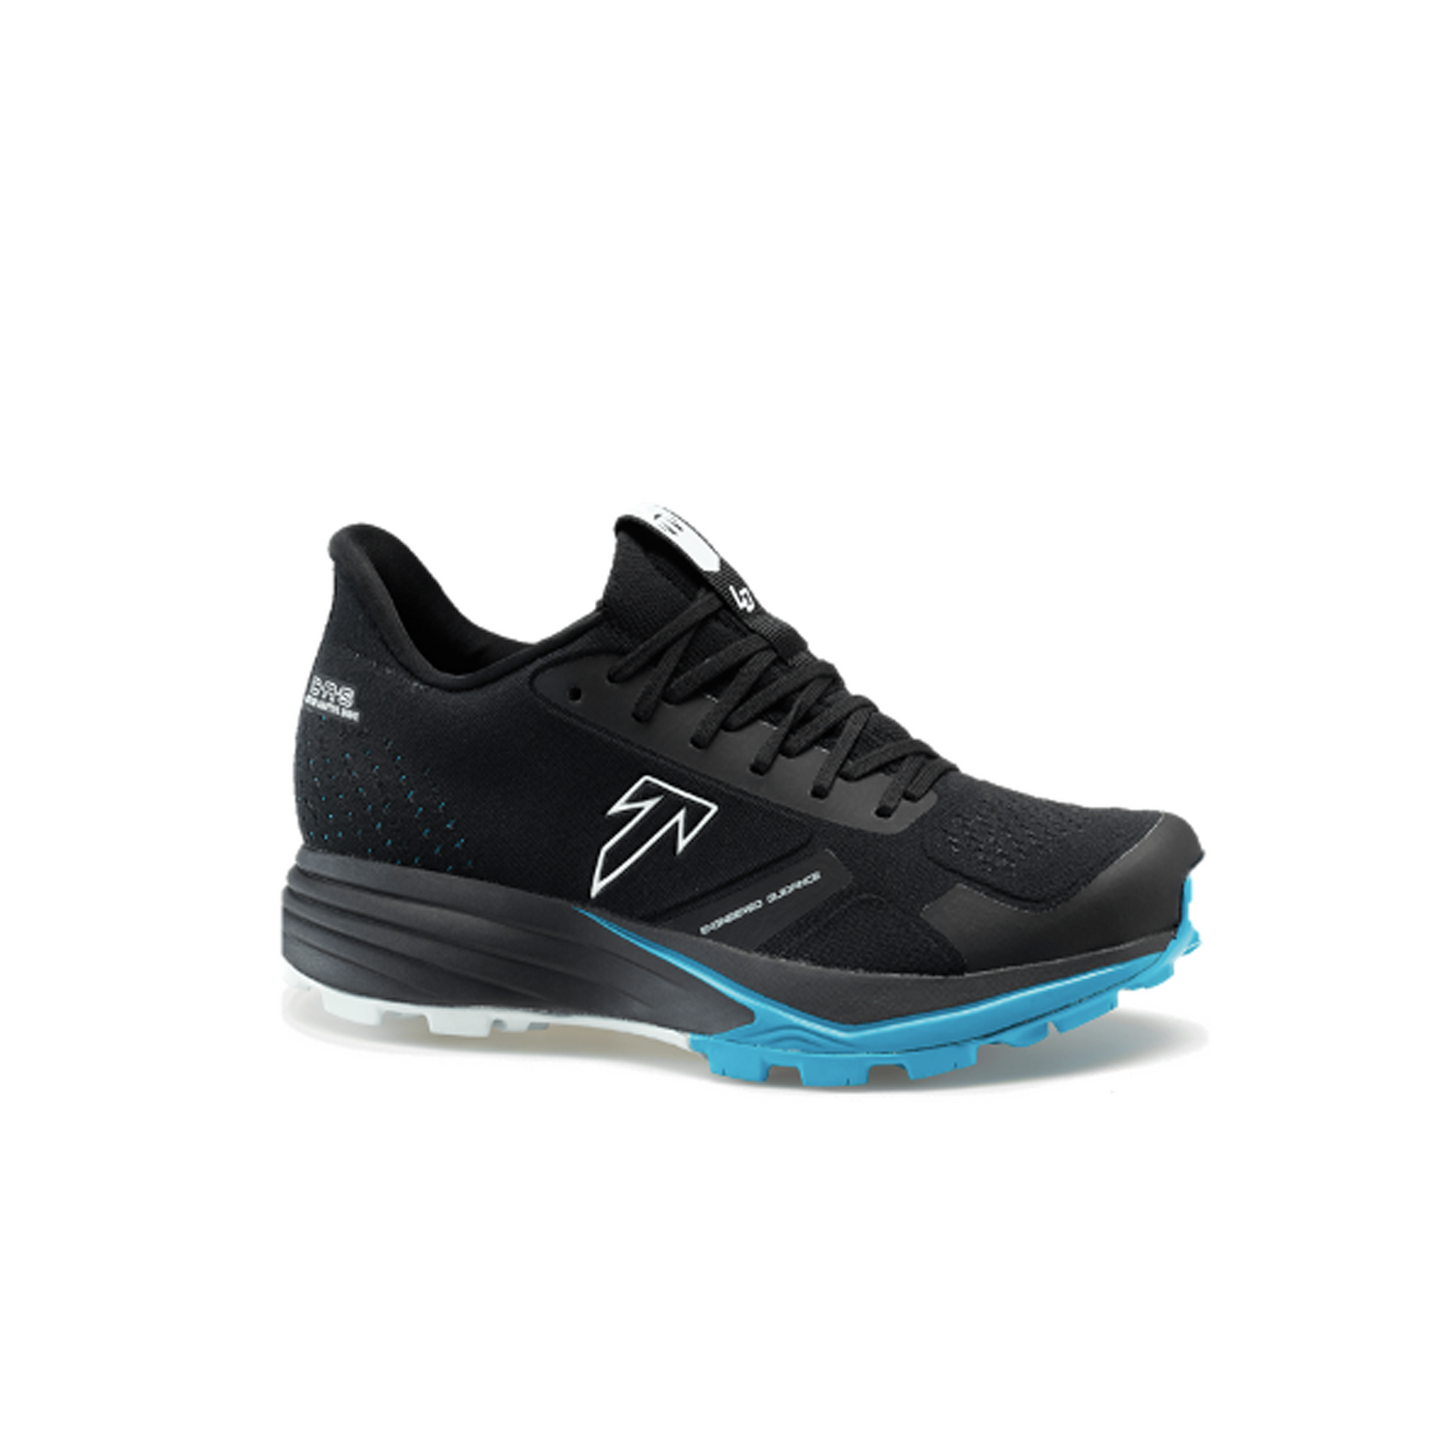 Side view of the Women's Tecnica Origin LD trail running shoe in the colour Black/Laguna